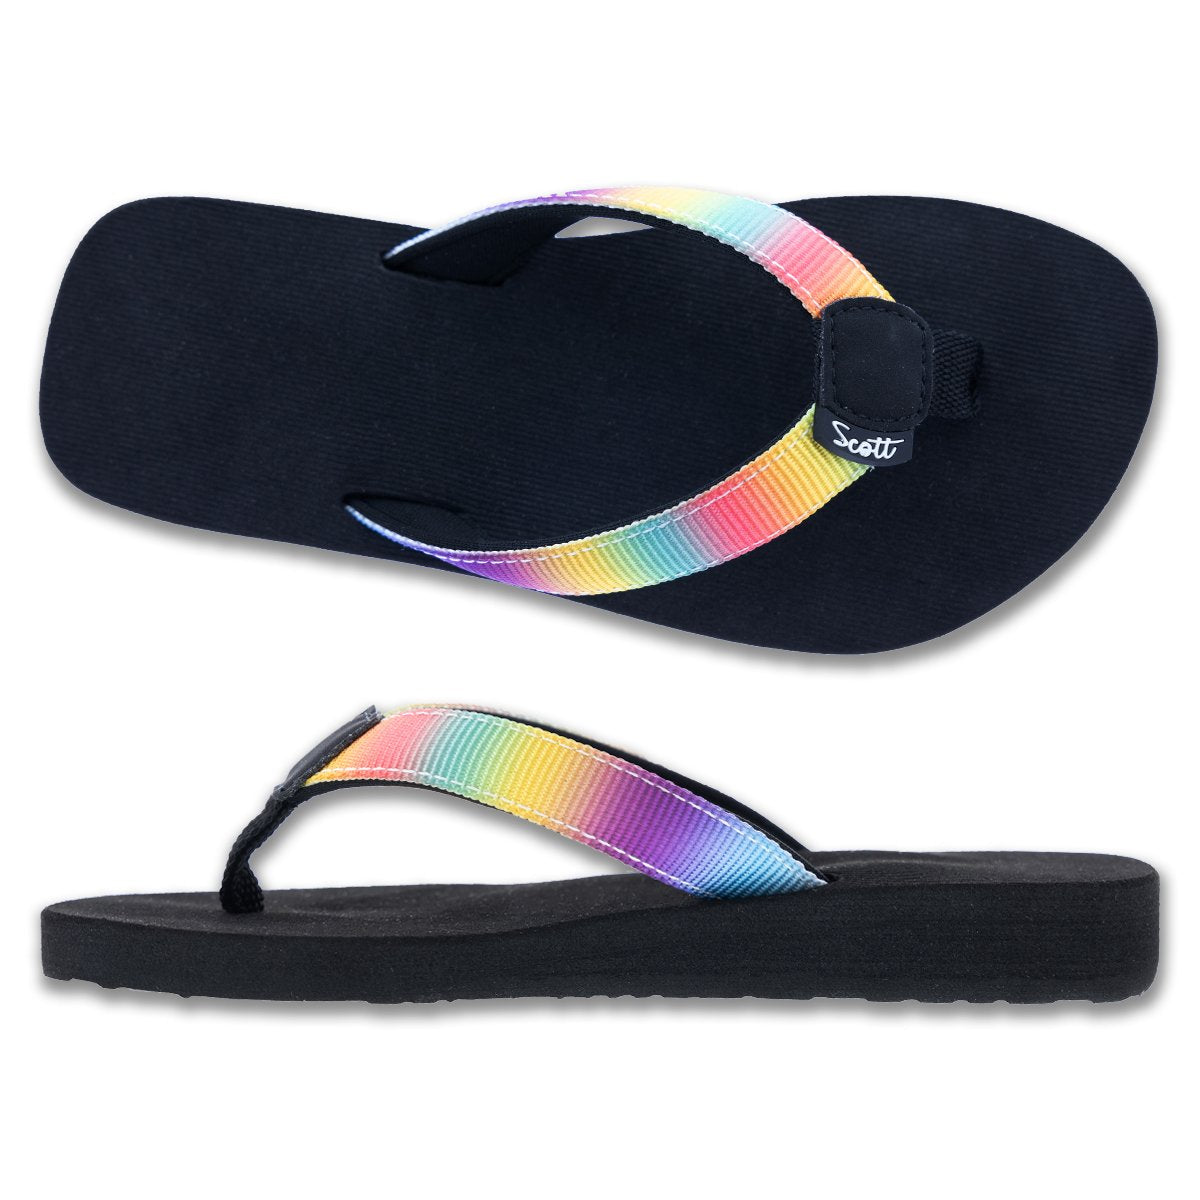 Scott Hawaii Girl's Kamalei Rainbow Flip-flops